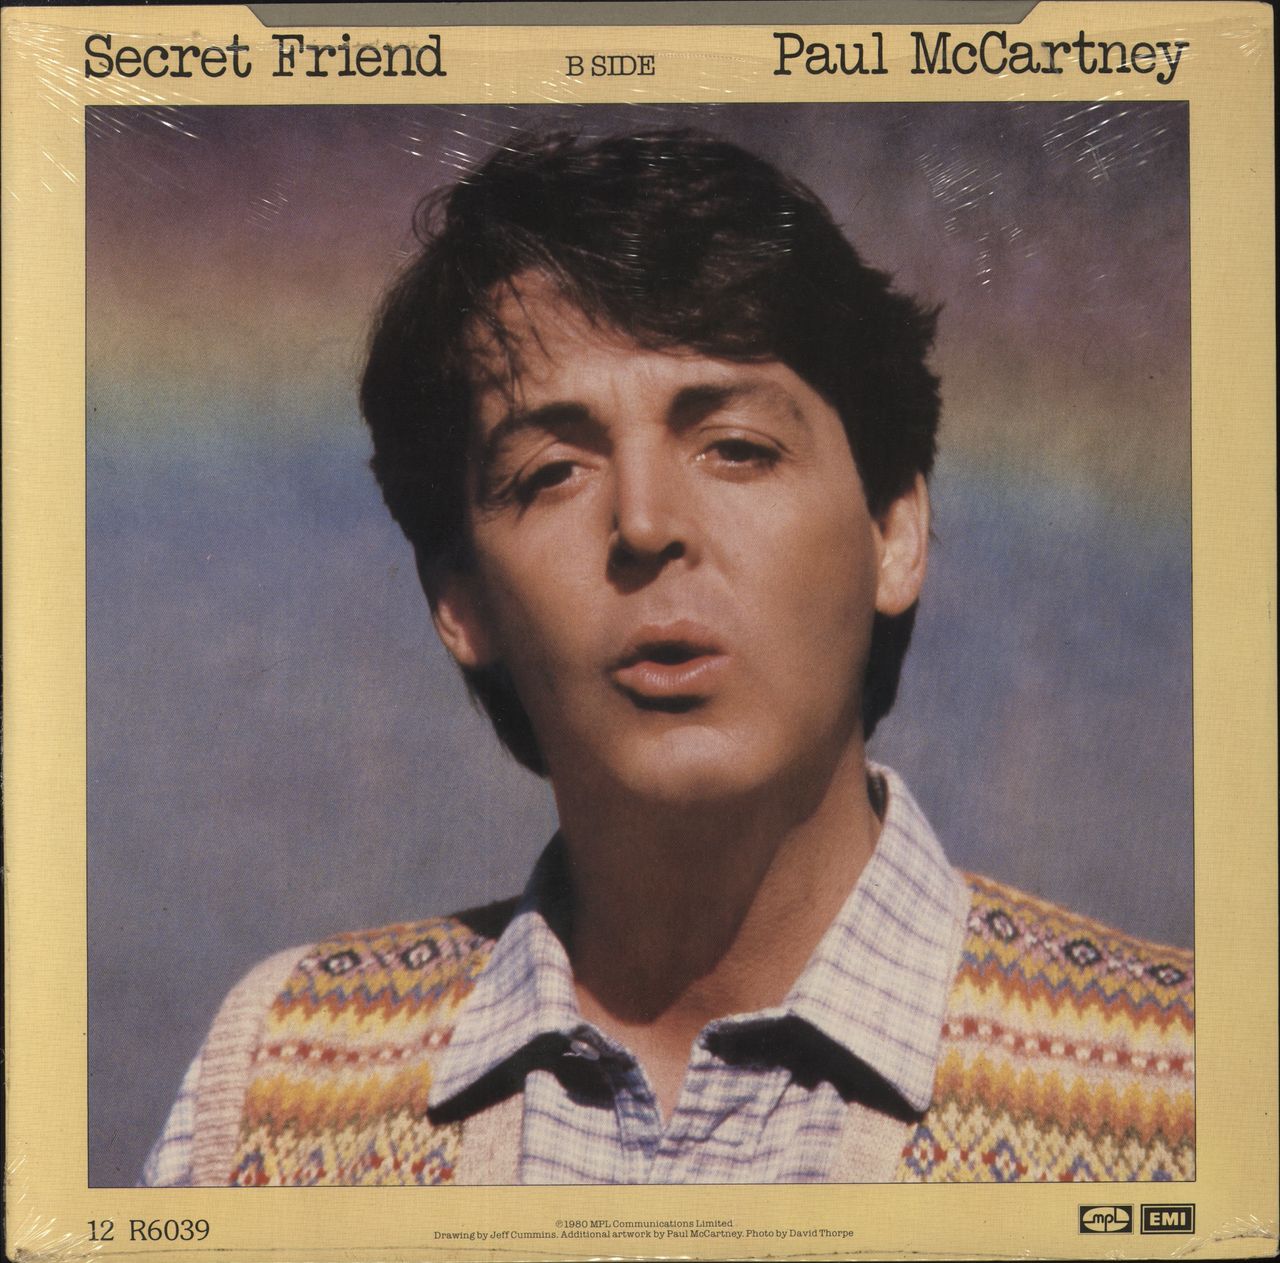 Paul McCartney and Wings Temporary Secretary - Open Shrink UK 12" vinyl single (12 inch record / Maxi-single)